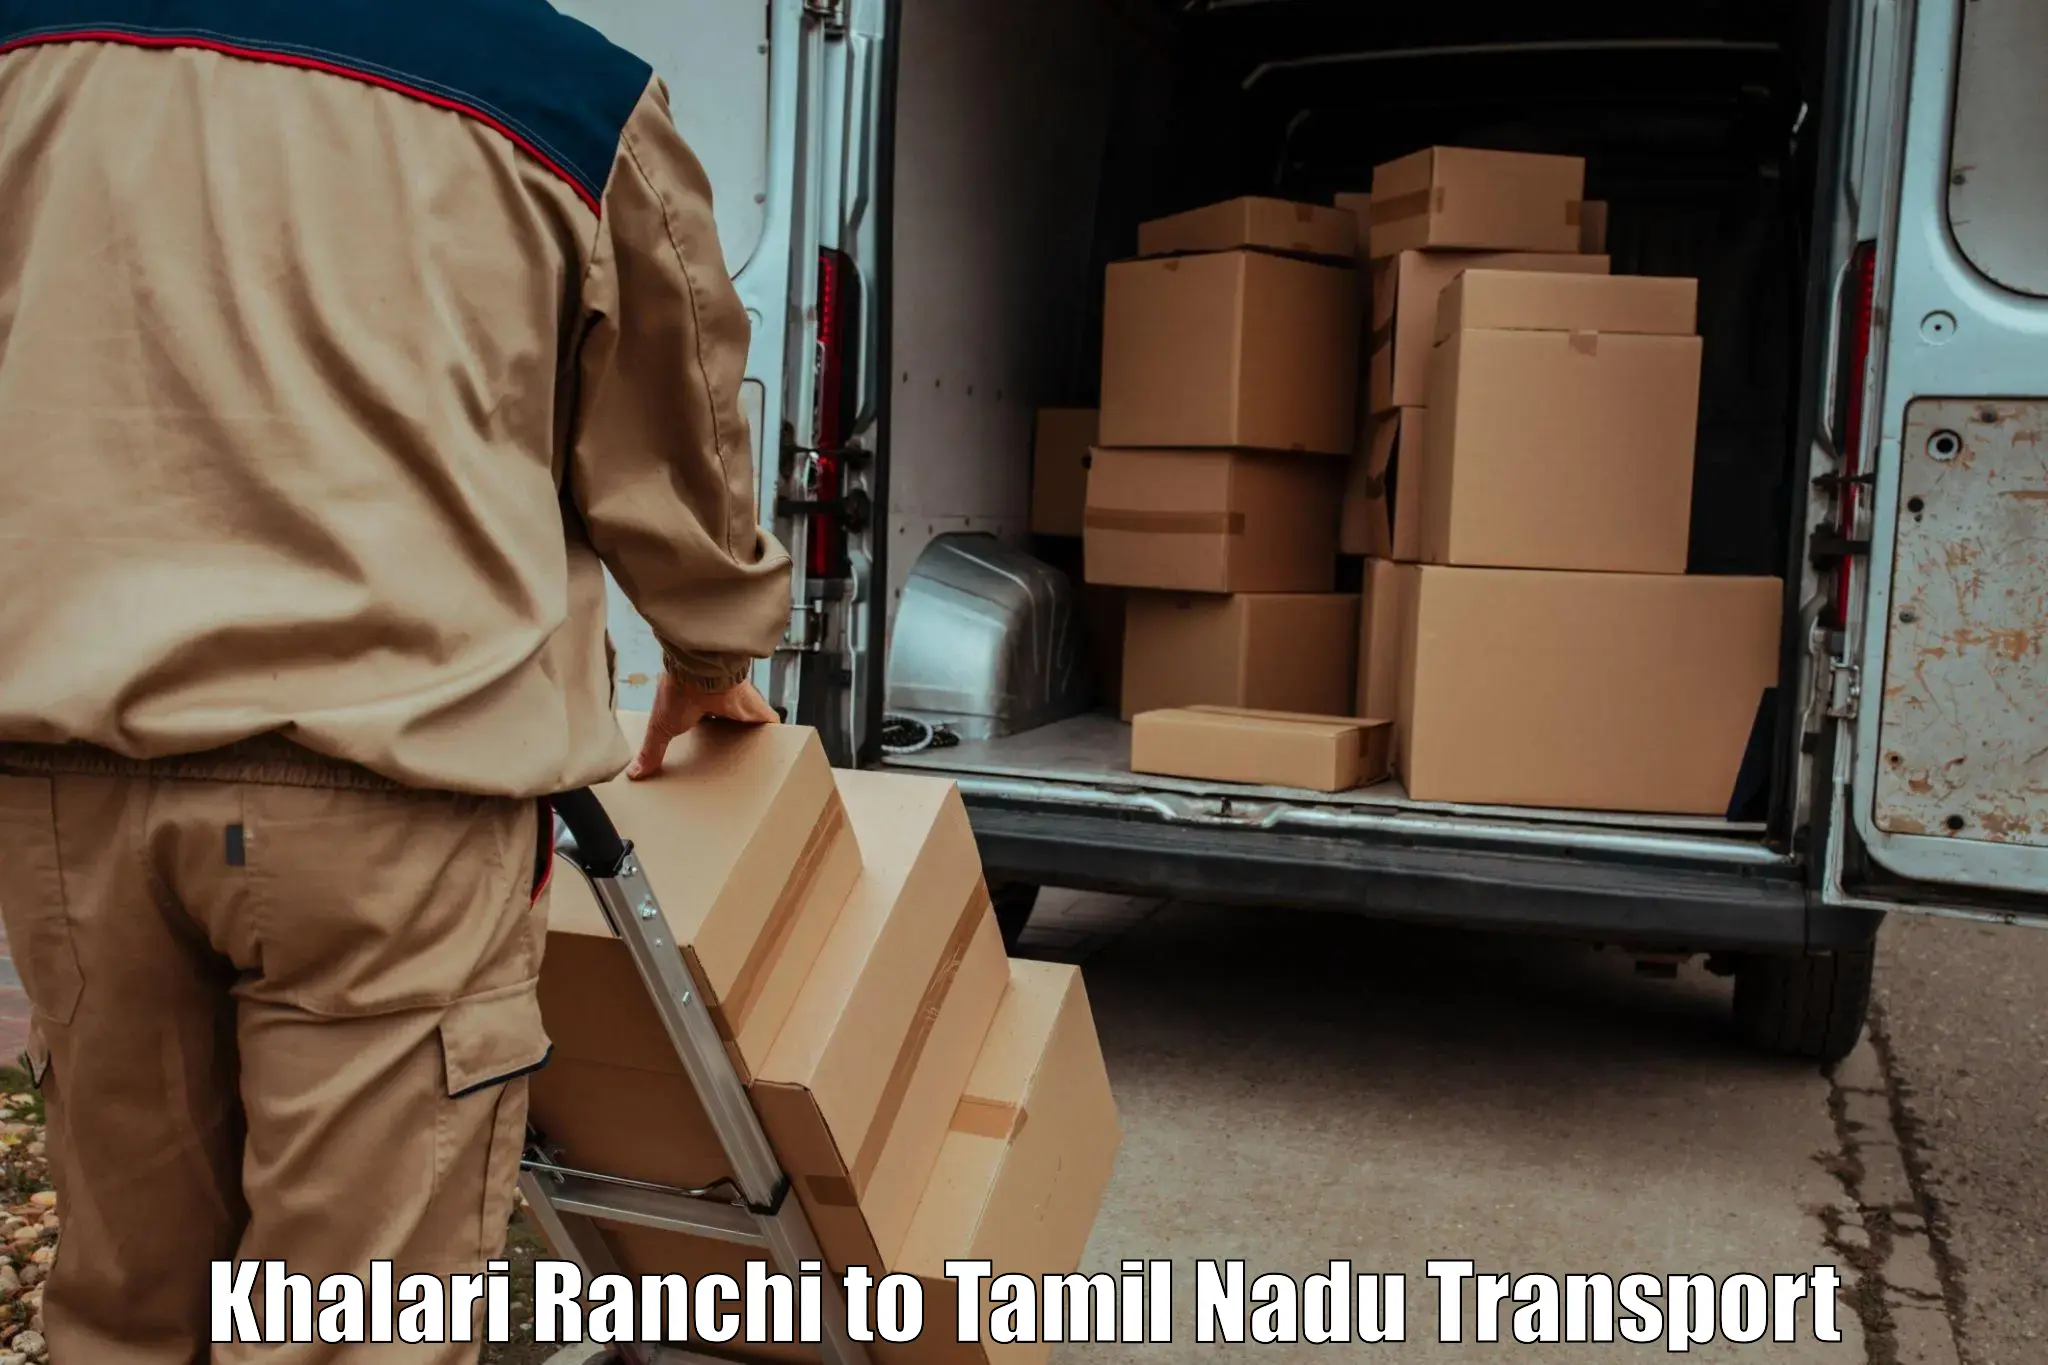 Nearest transport service Khalari Ranchi to Vedasandur